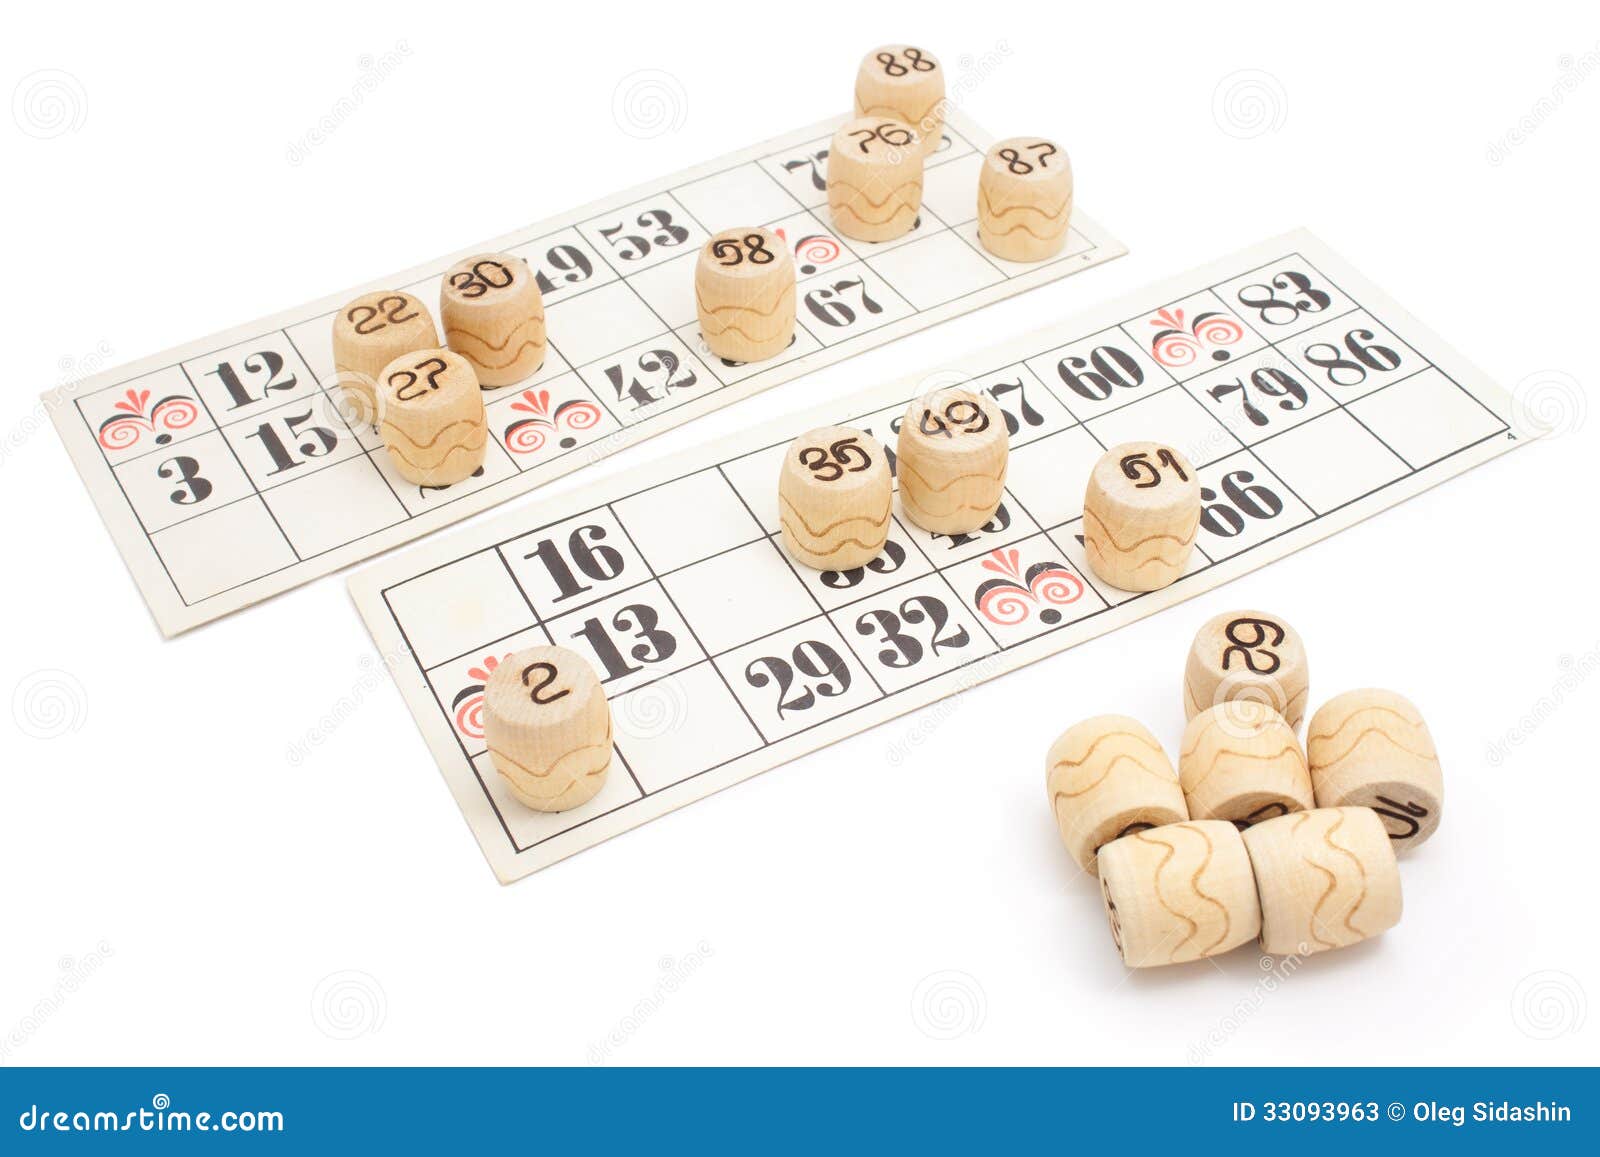 Loto Game(Bingo) Cardboards Isolated Stock Photos - Image ...
